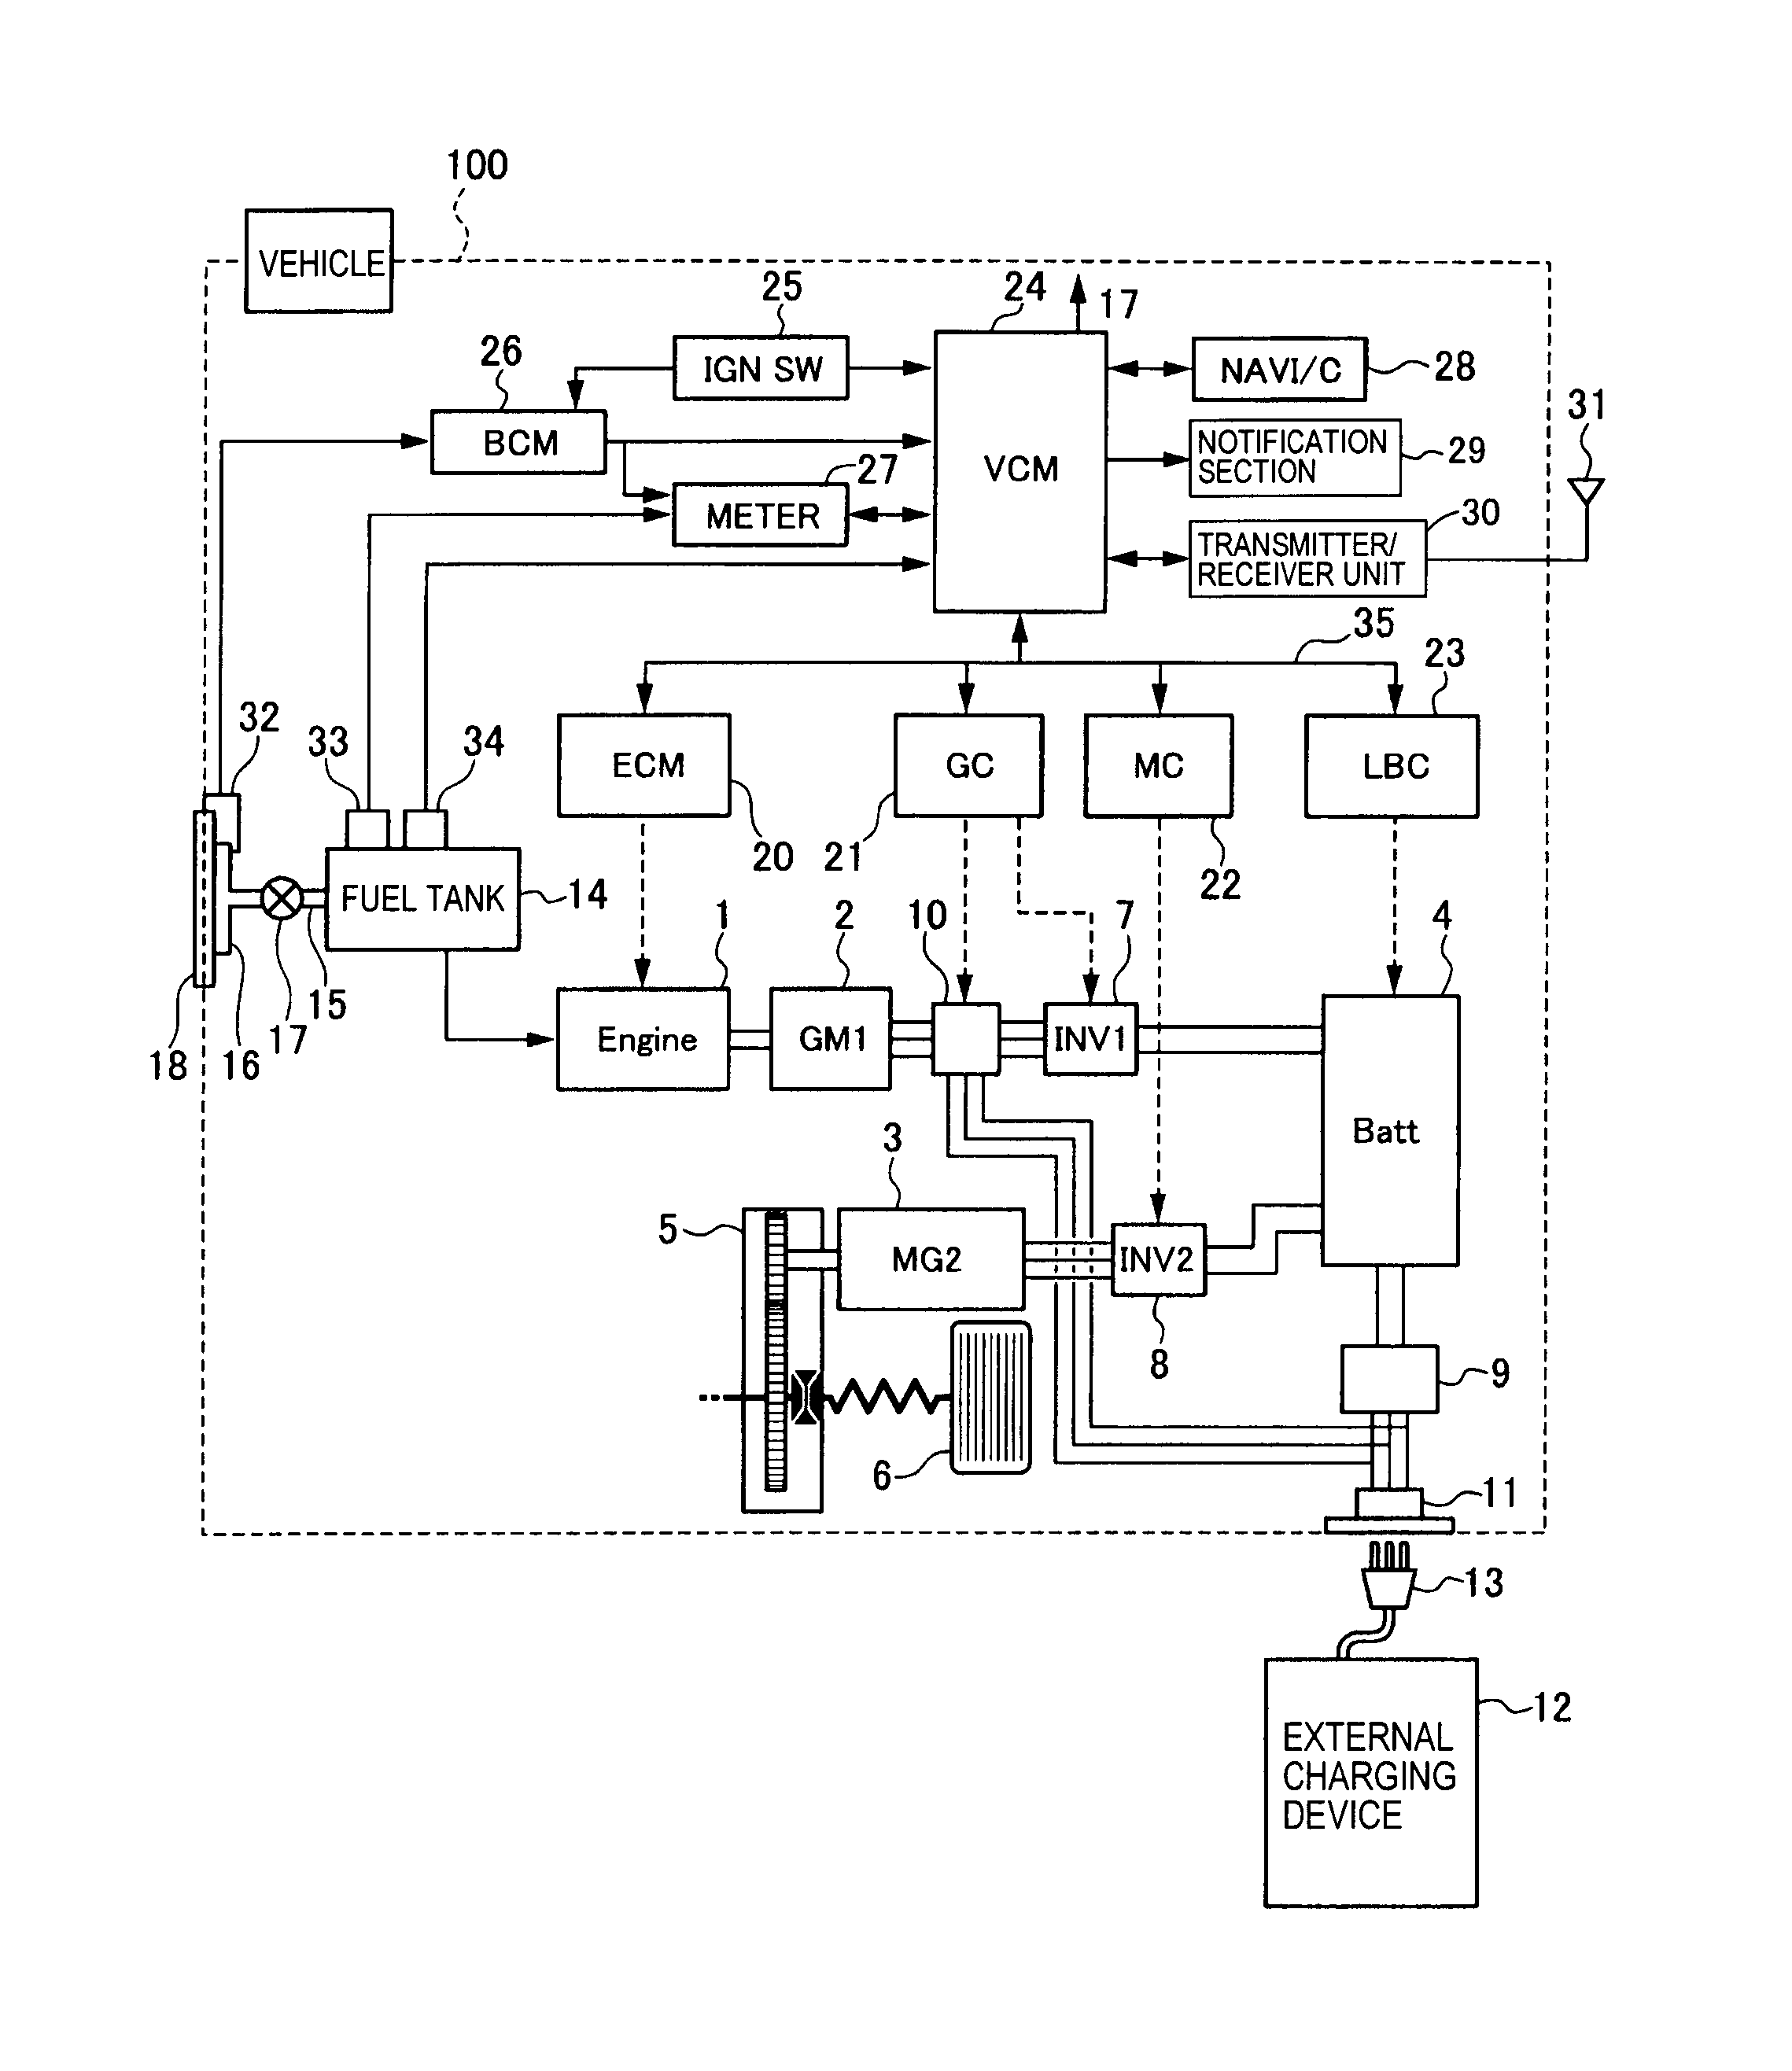 07 isuzu npr 6.0 tac module wiring diagram